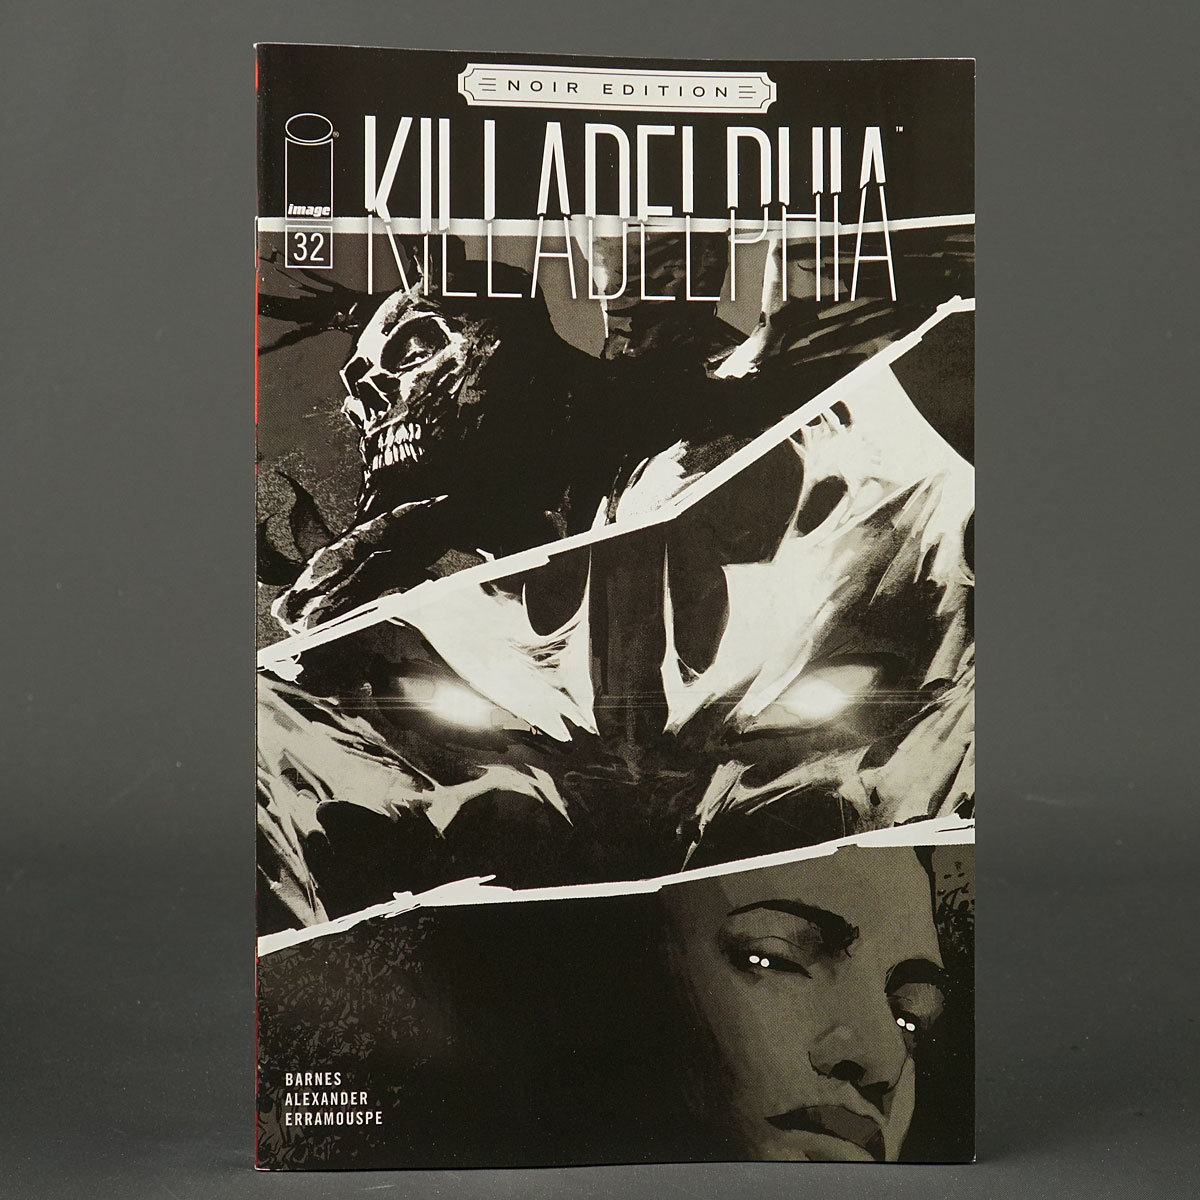 KILLADELPHIA #32 Cvr B Noir Edition Image Comics 1123IM841 32B (CA) Alexander (W) Barnes (A) Alexander + Erramouspe